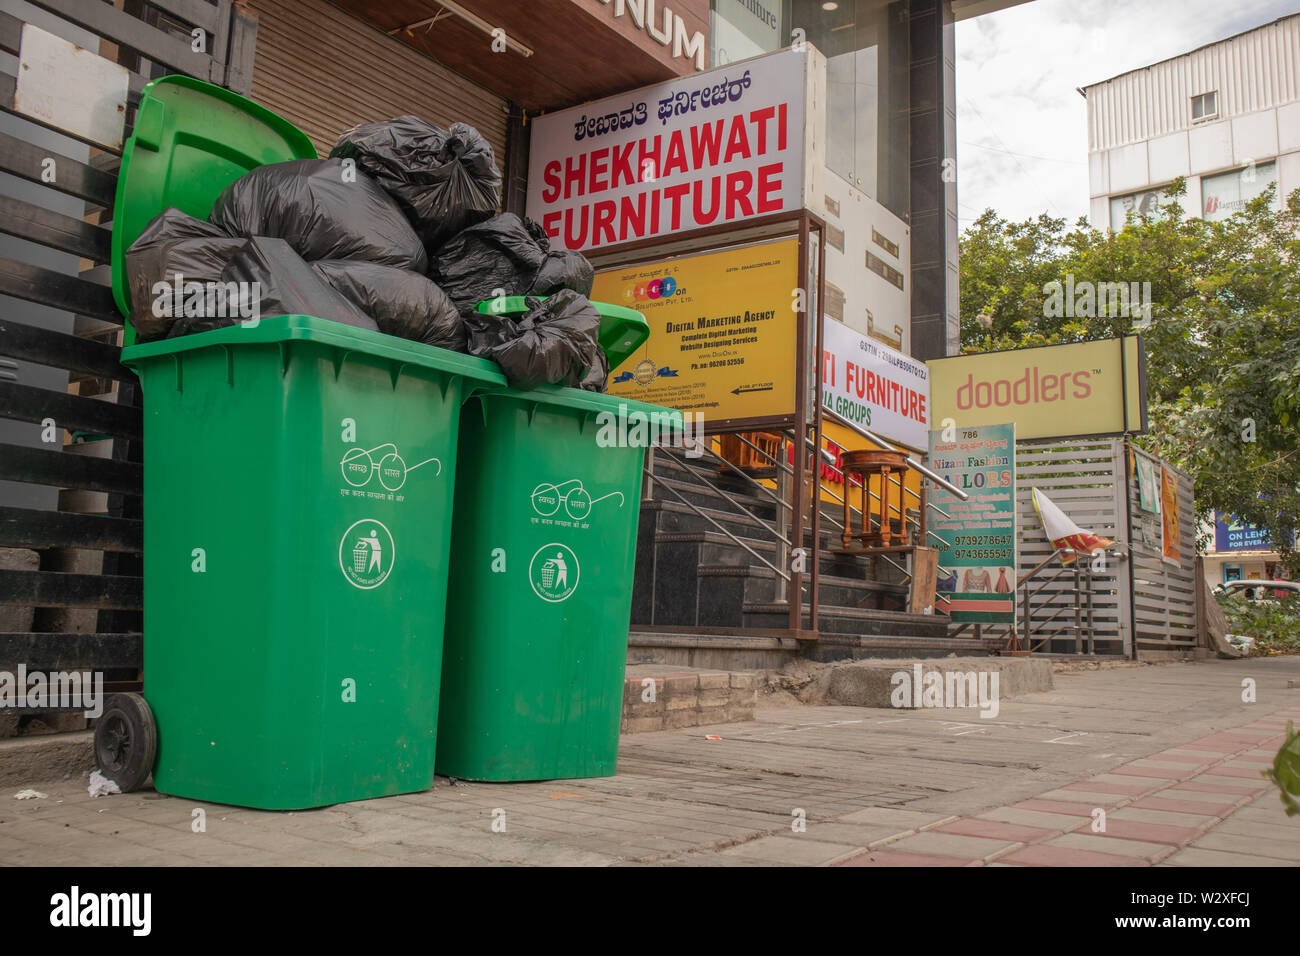 https://c8.alamy.com/comp/W2XFCJ/bengaluru-india-june-27-2019-green-big-trash-box-with-swachh-bharat-printed-on-them-green-litter-located-on-the-road-side-of-the-bengalore-W2XFCJ.jpg